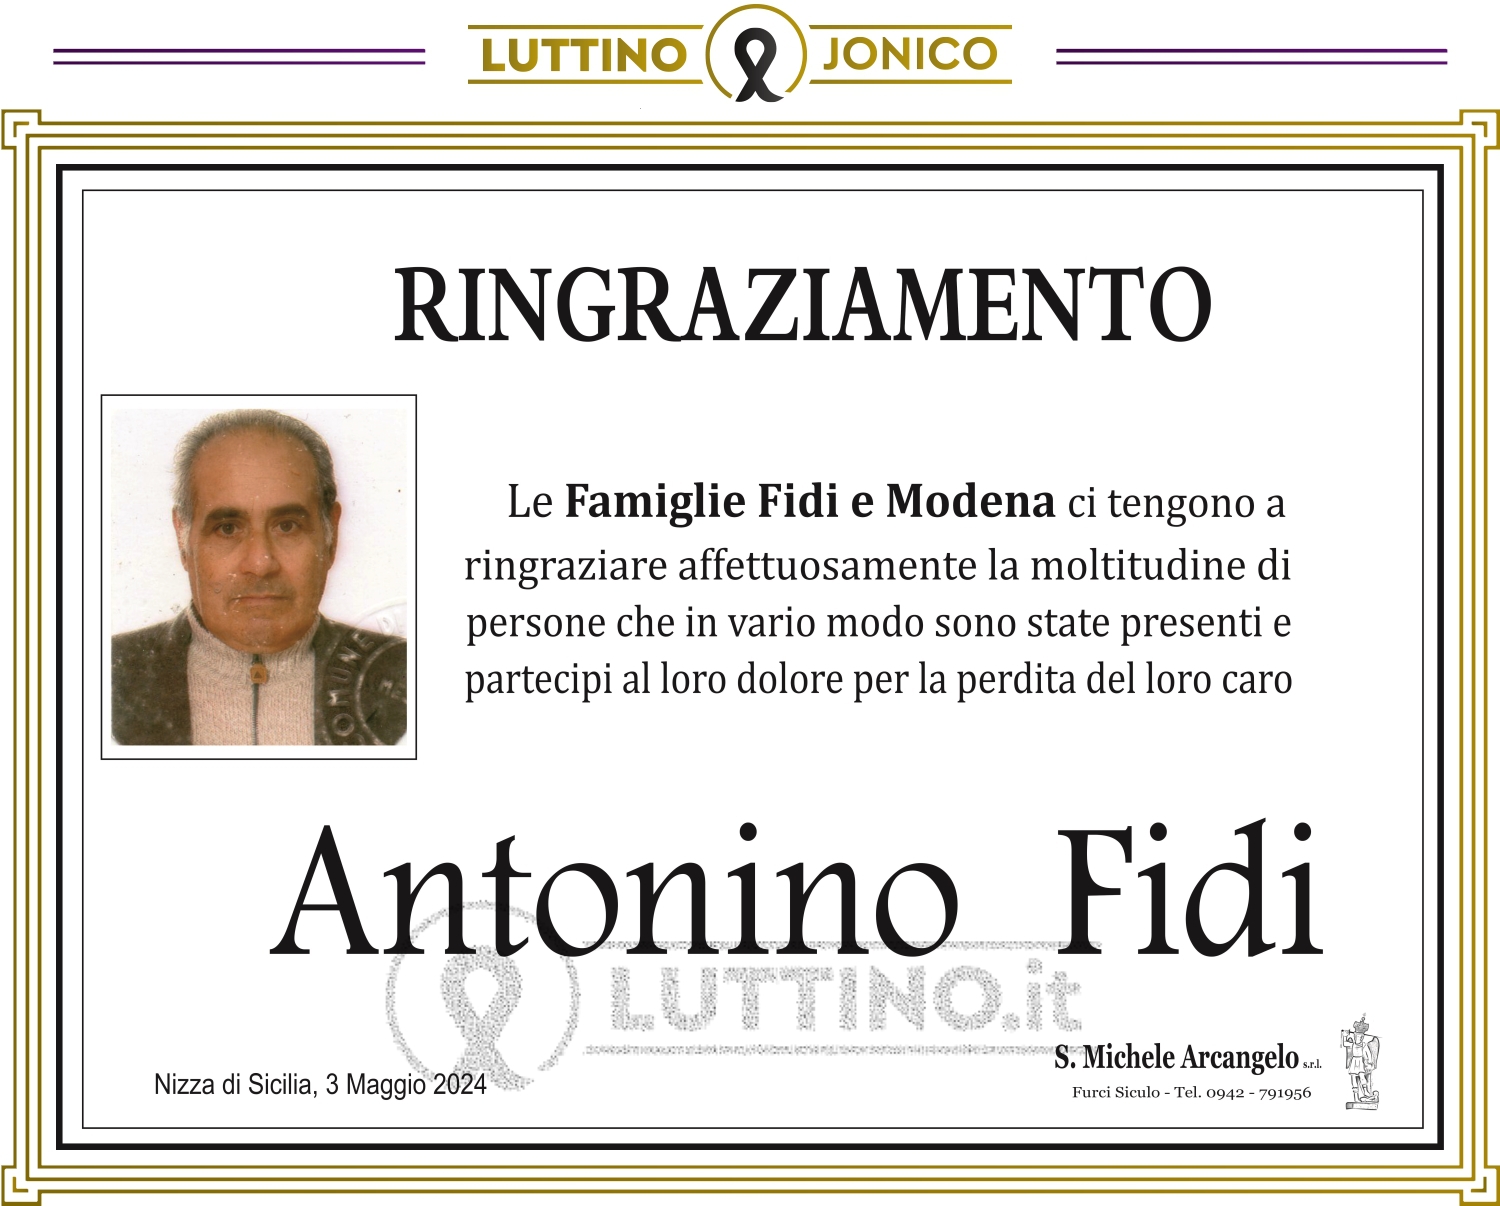 Antonino Fidi